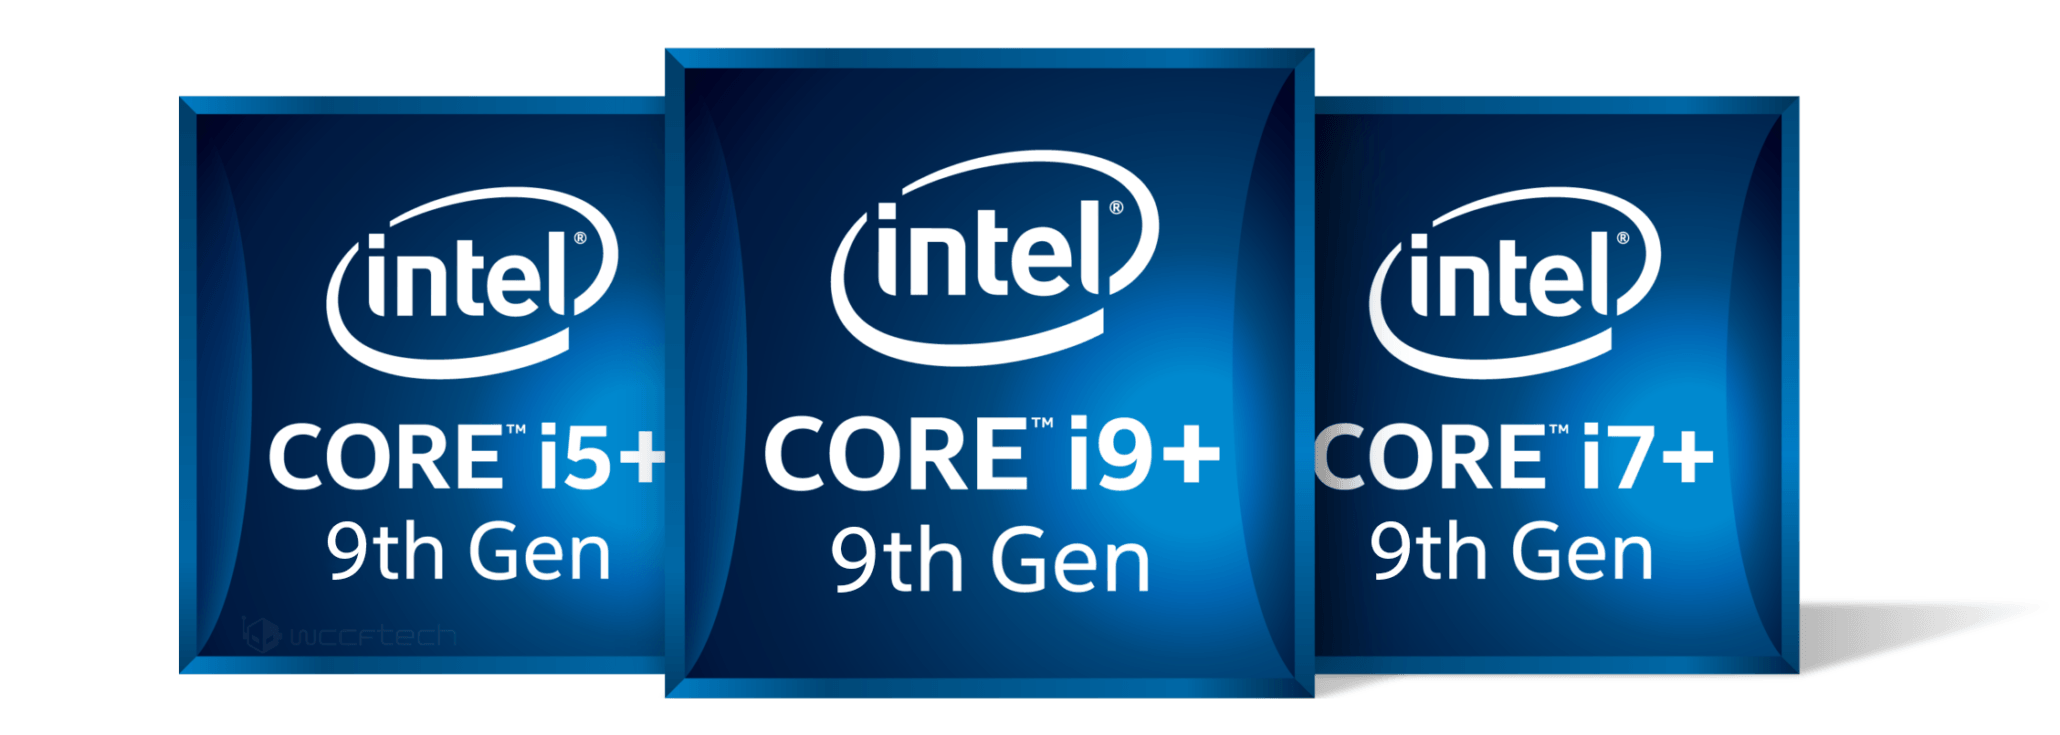 Intel I Processor Logo - Intel Ditching Hyper Threading With New Core I7 9700K Coffee Lake